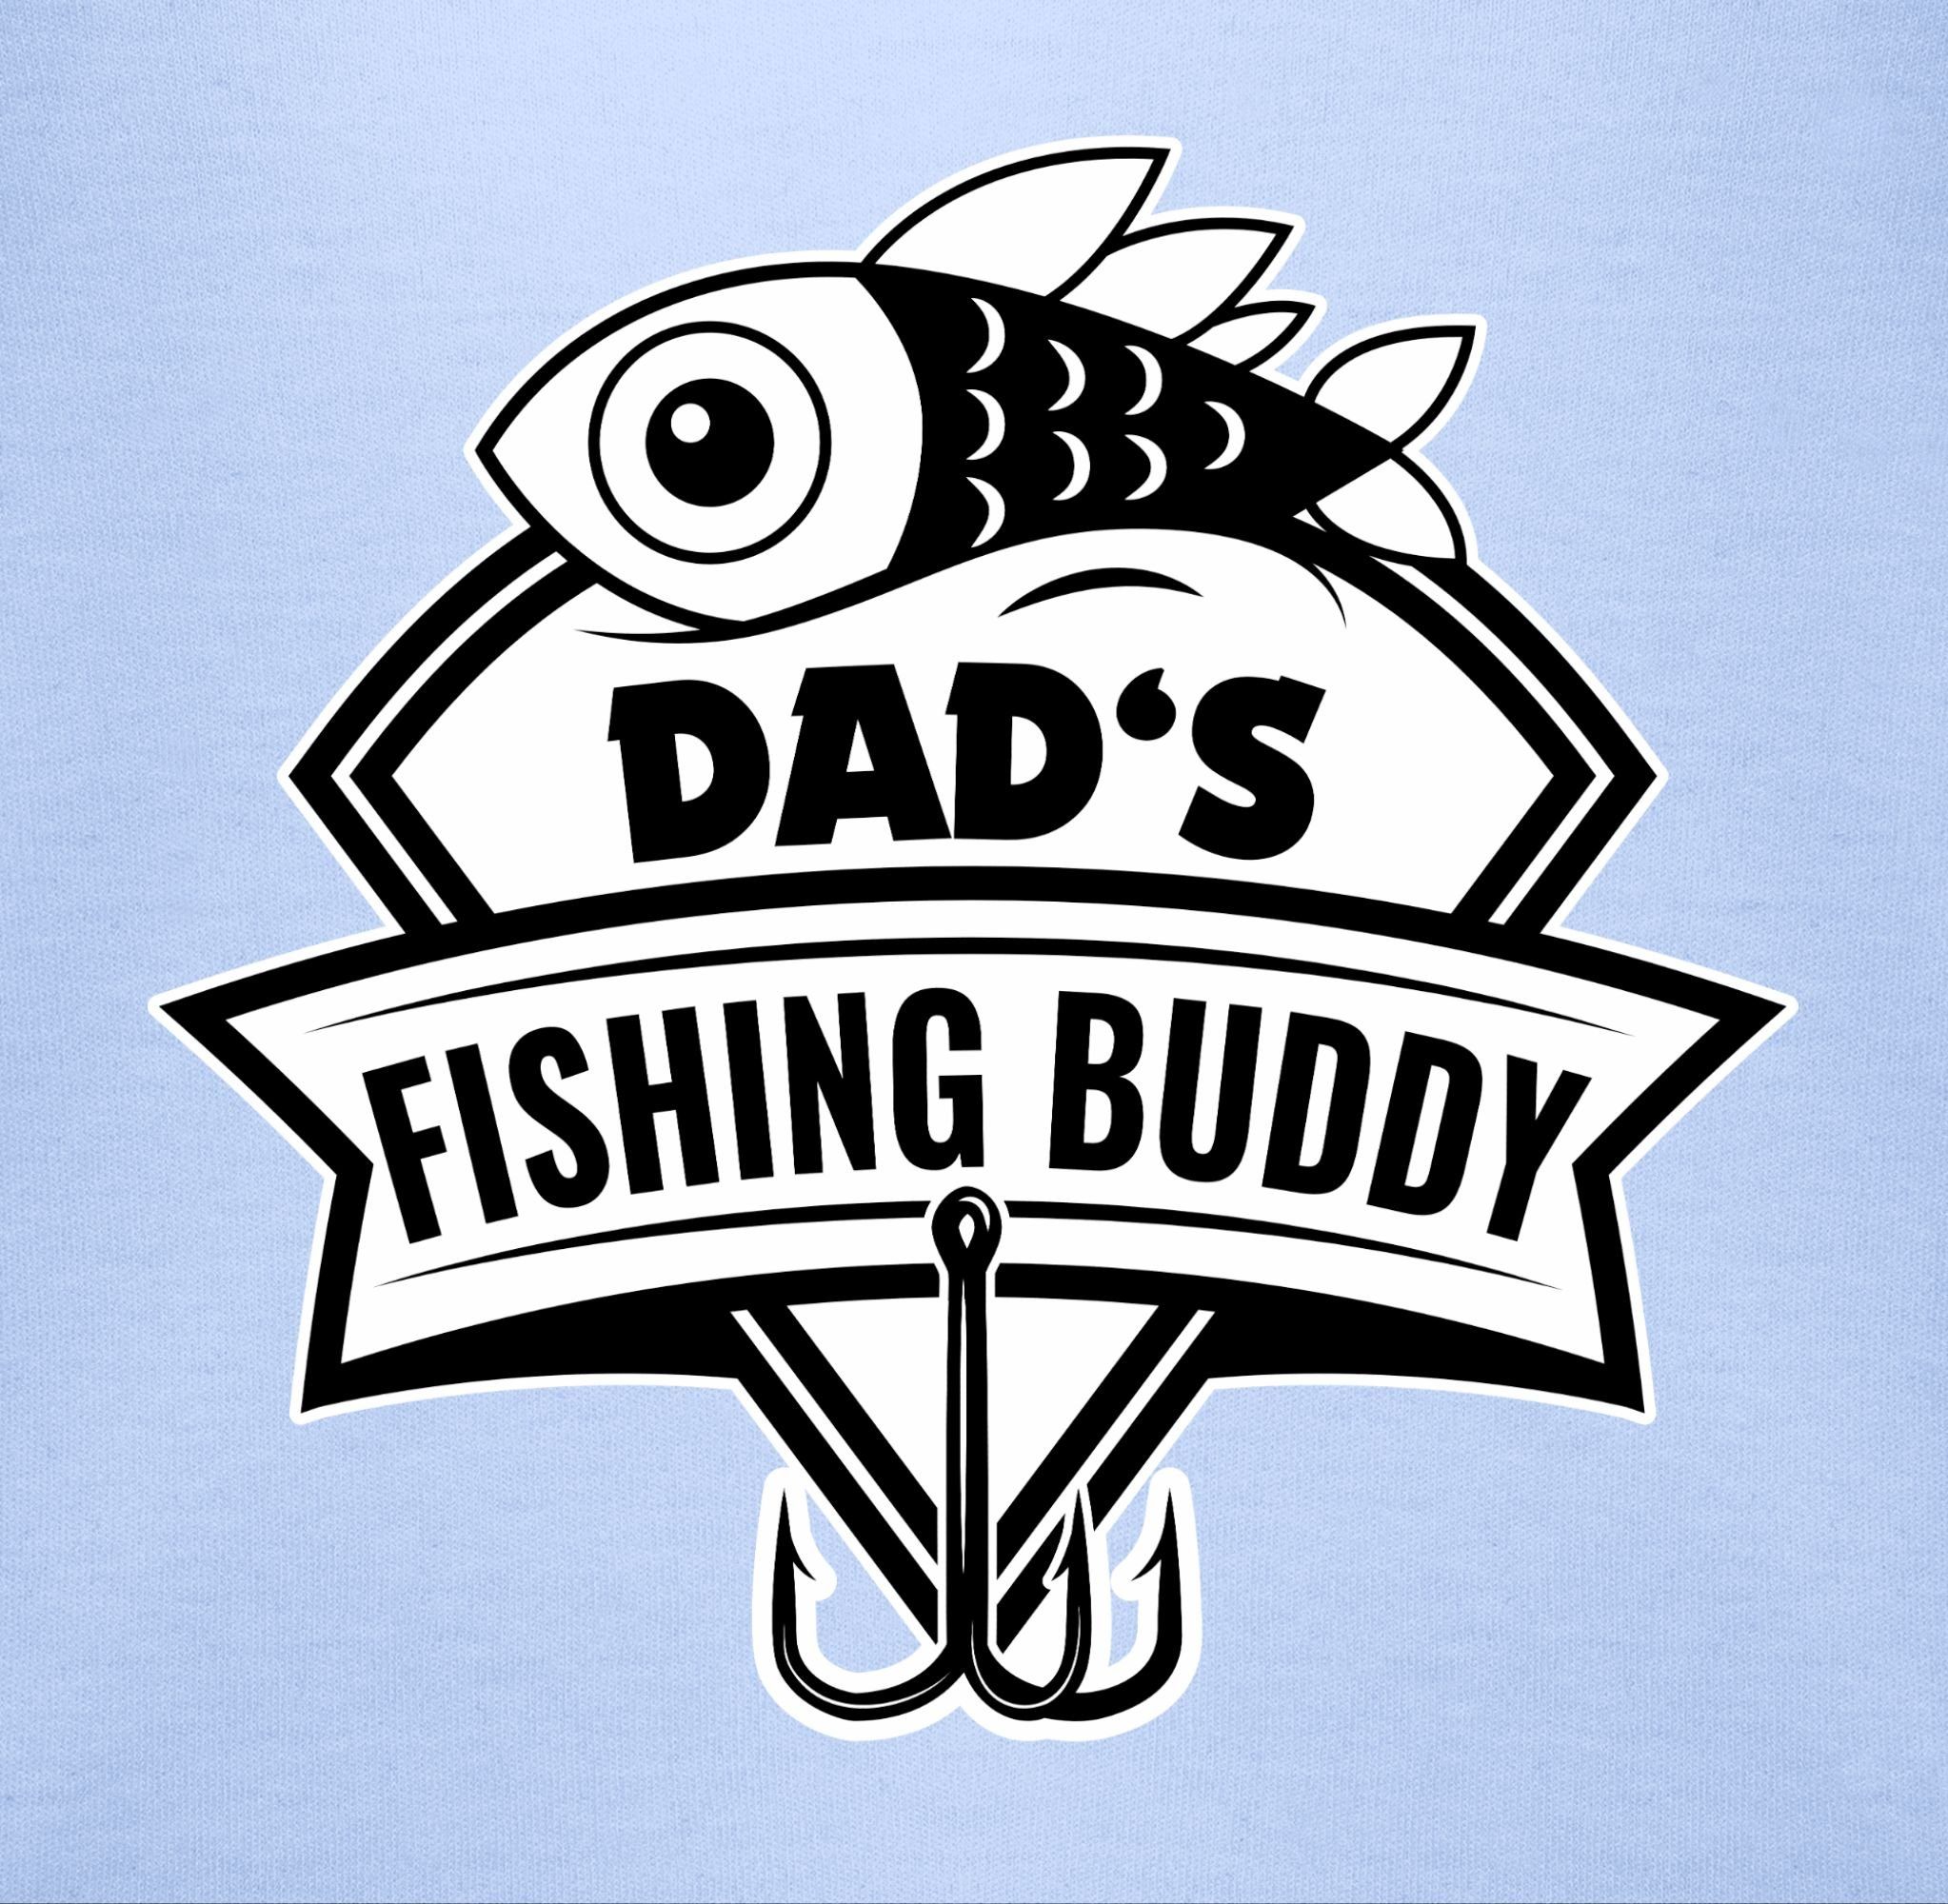 Shirtracer Shirtbody Dad's Babyblau Baby Geschenk fishing Buddy 1 Vatertag